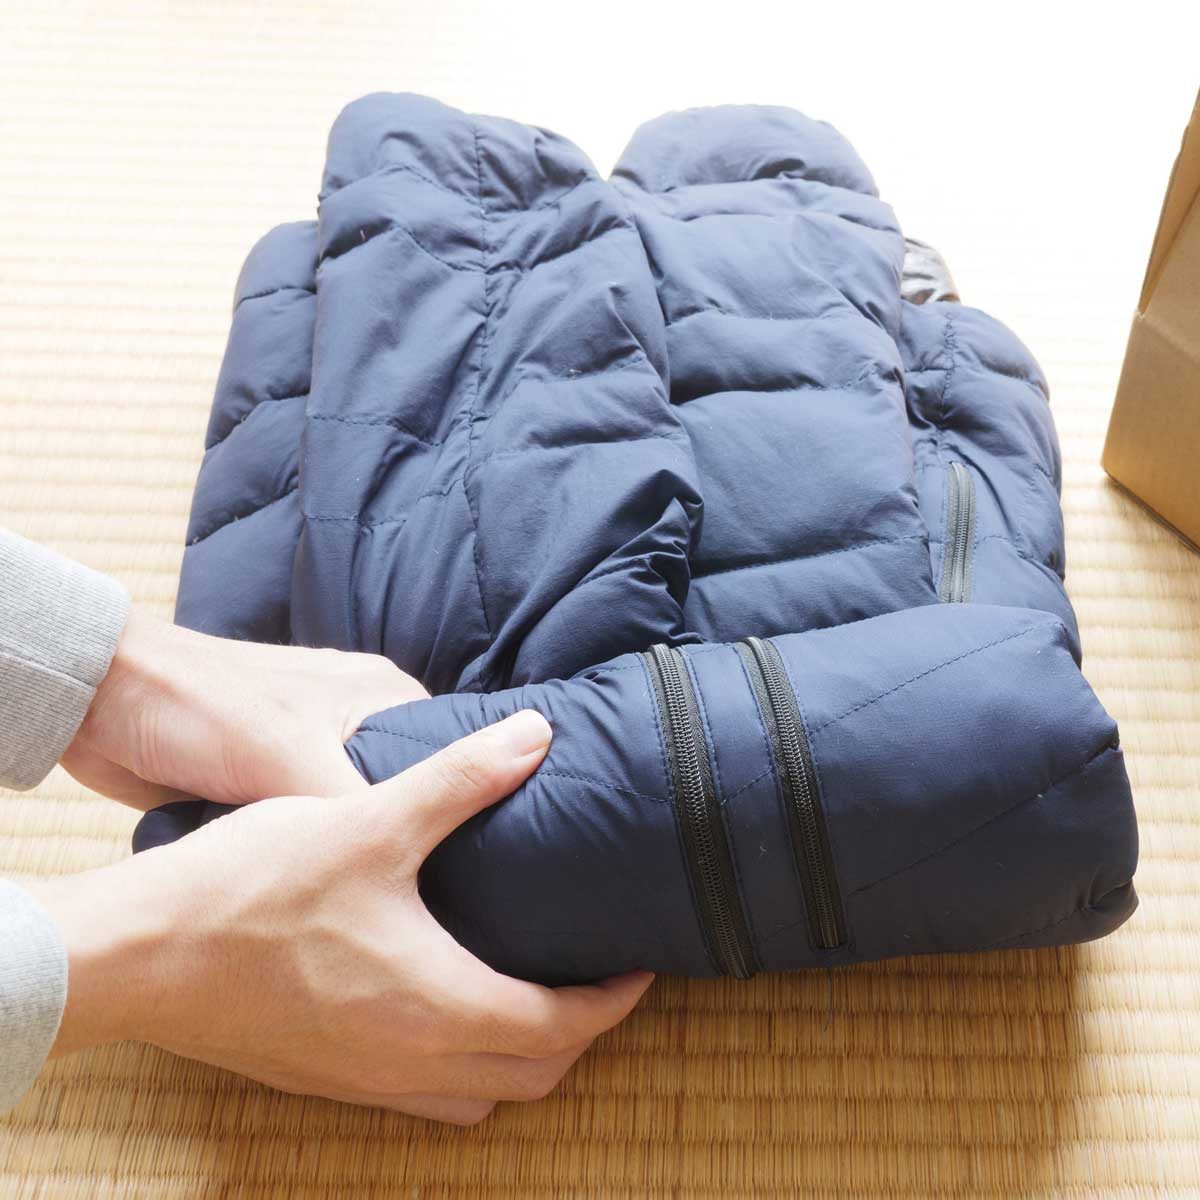 How To Wash A Down Garment - Puffa Jacket / Sleeping Bag etc.